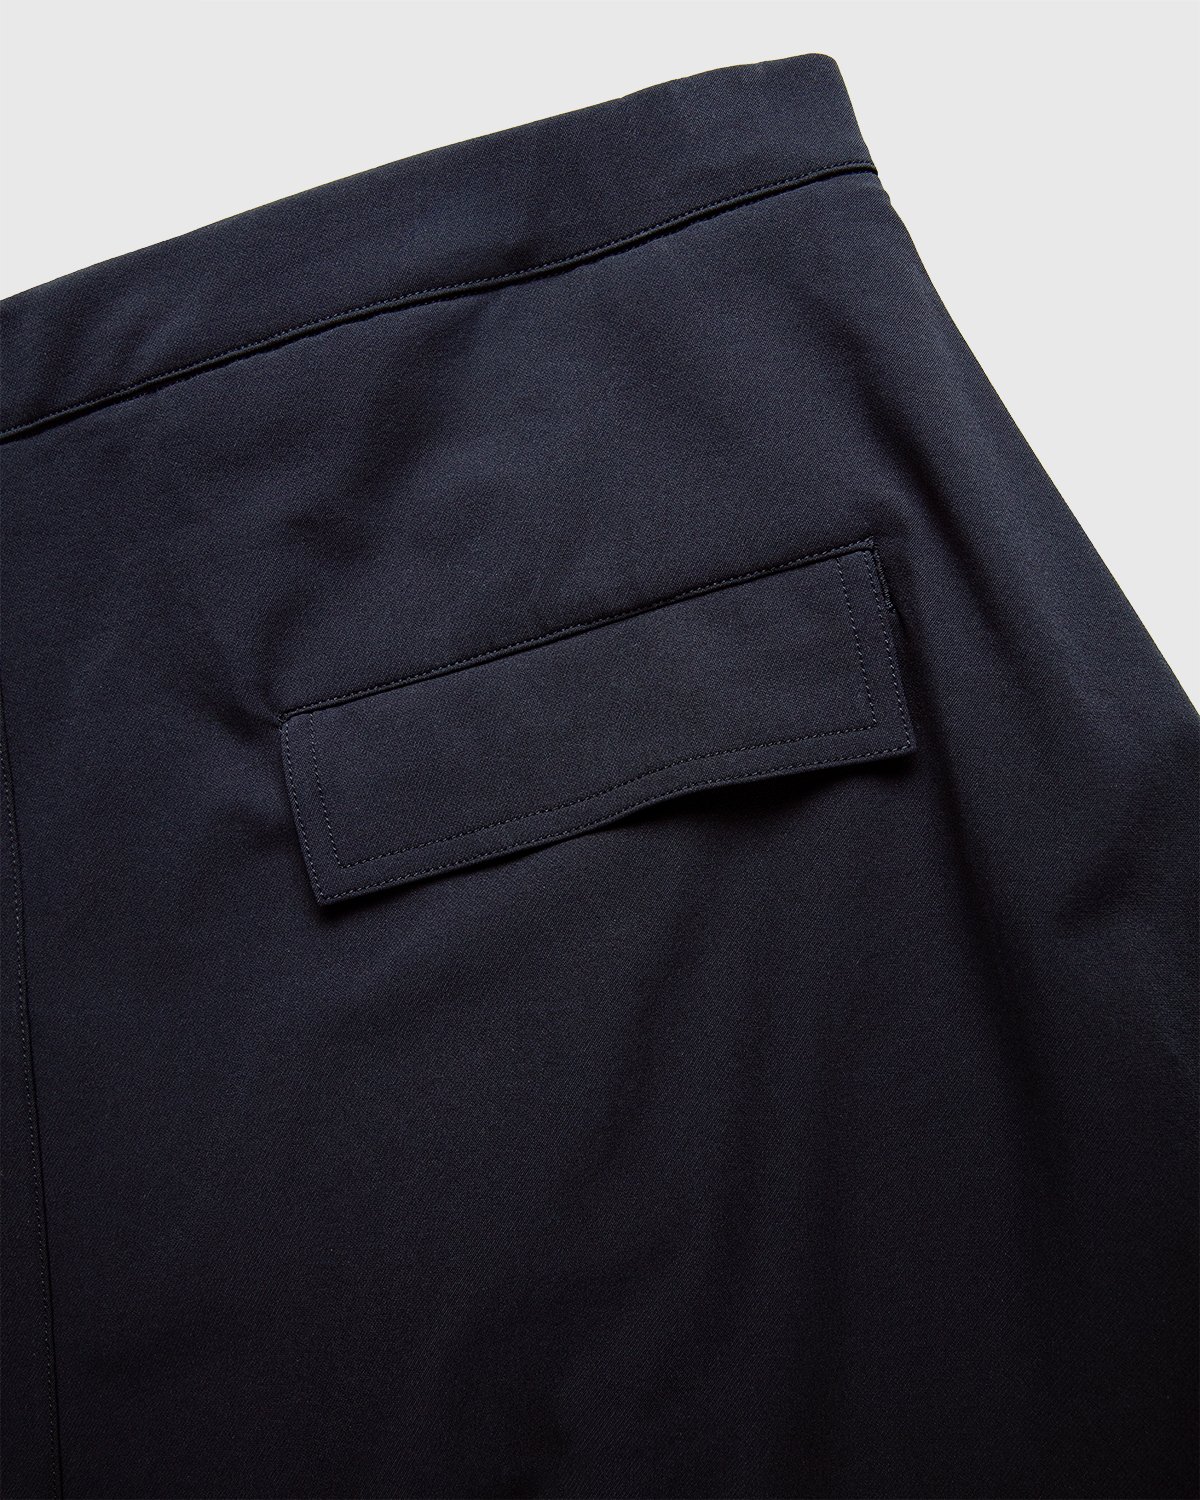 ACRONYM - SP28-DS Pants Black - Clothing - Black - Image 7